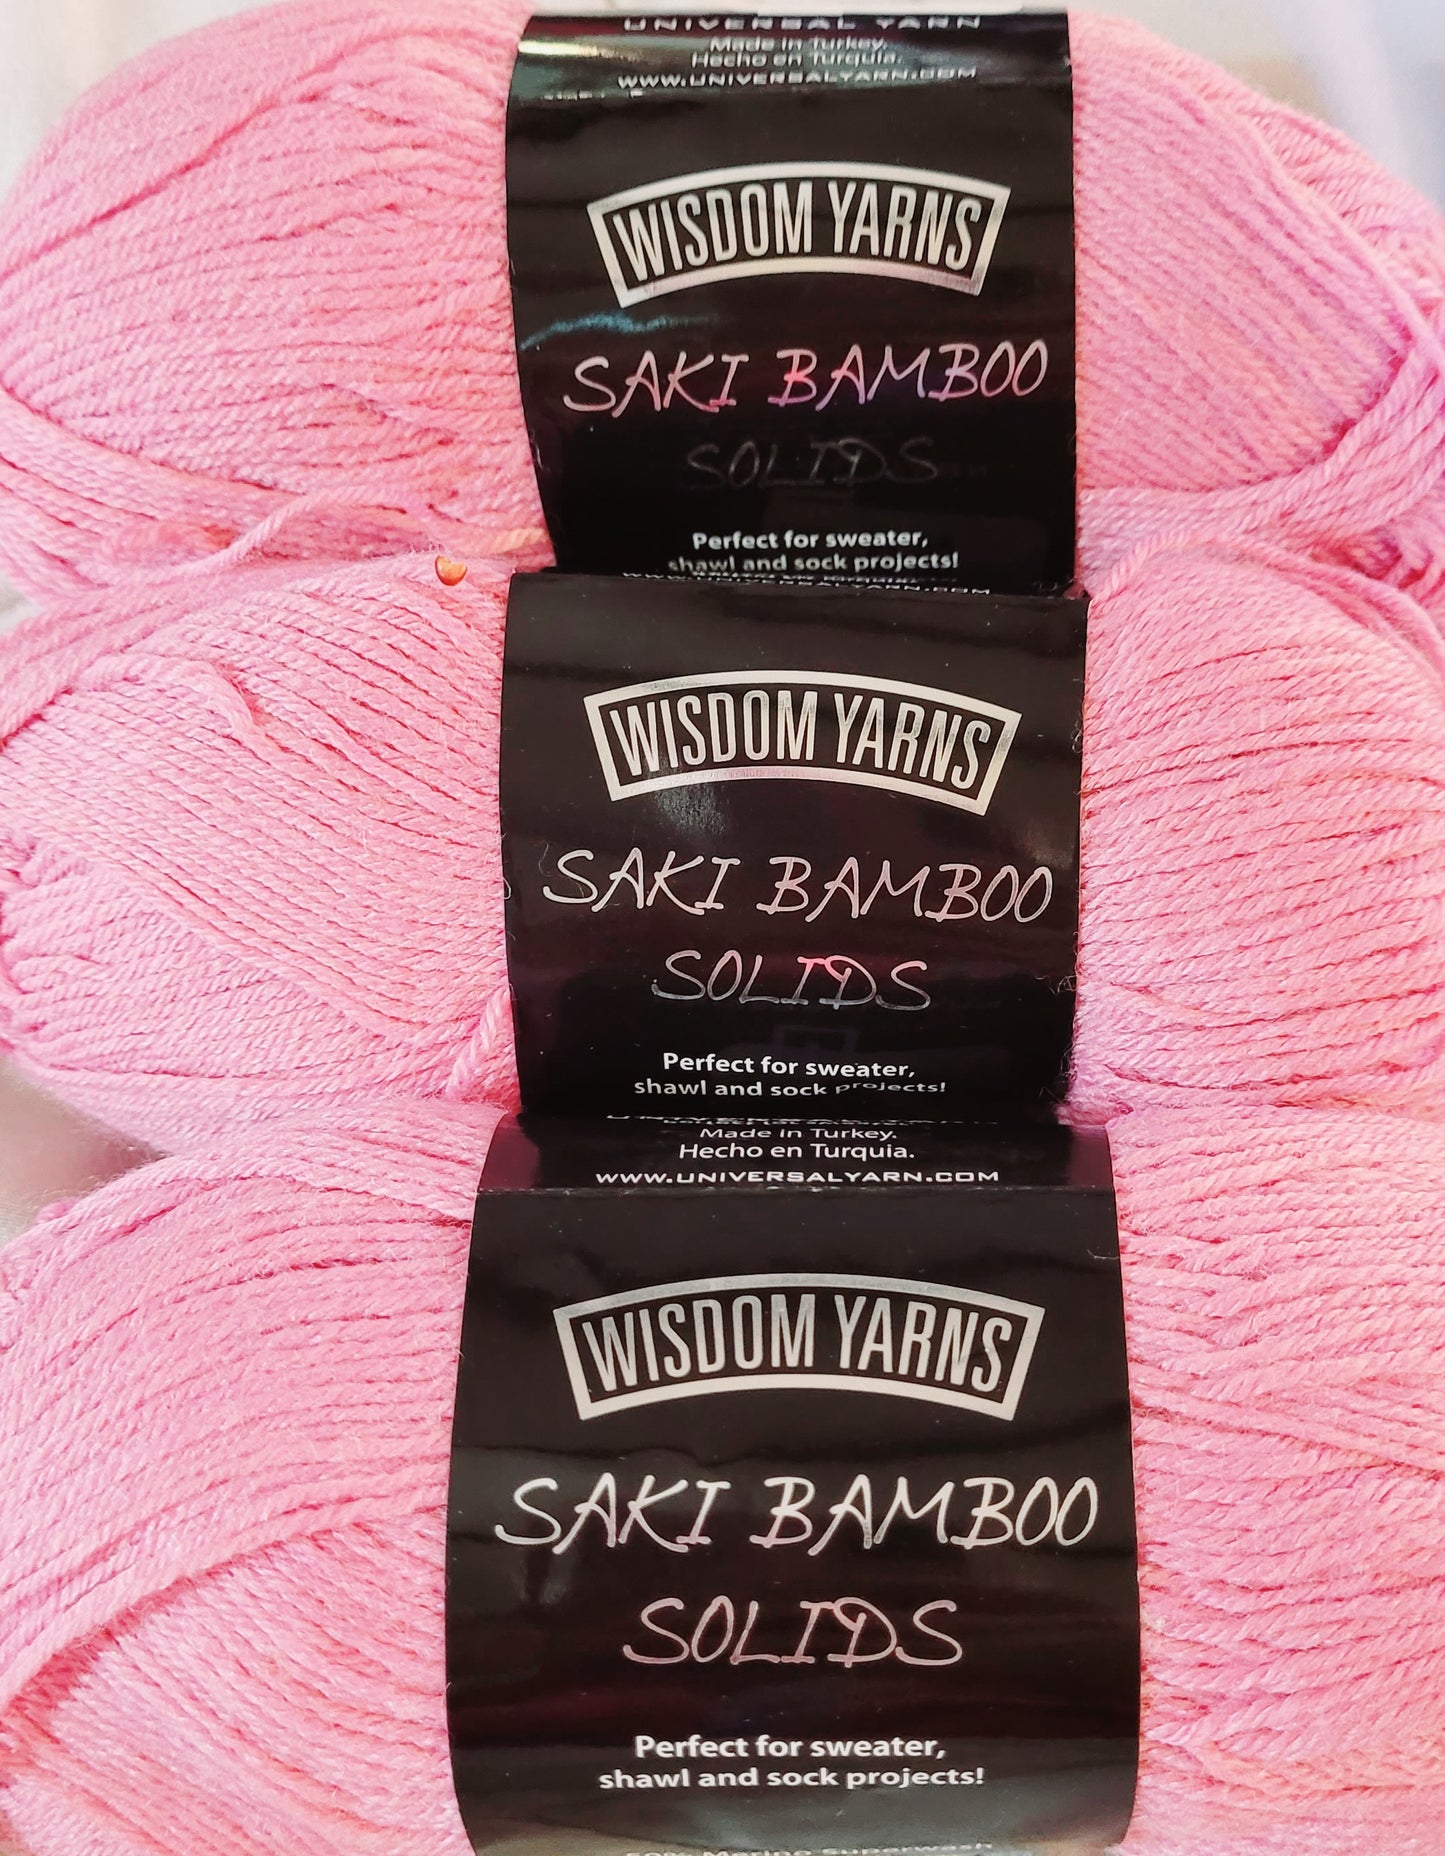 (3) Wisdom Yarns *Saki Bamboo Solids 690yds (Cotton Candy Pink)